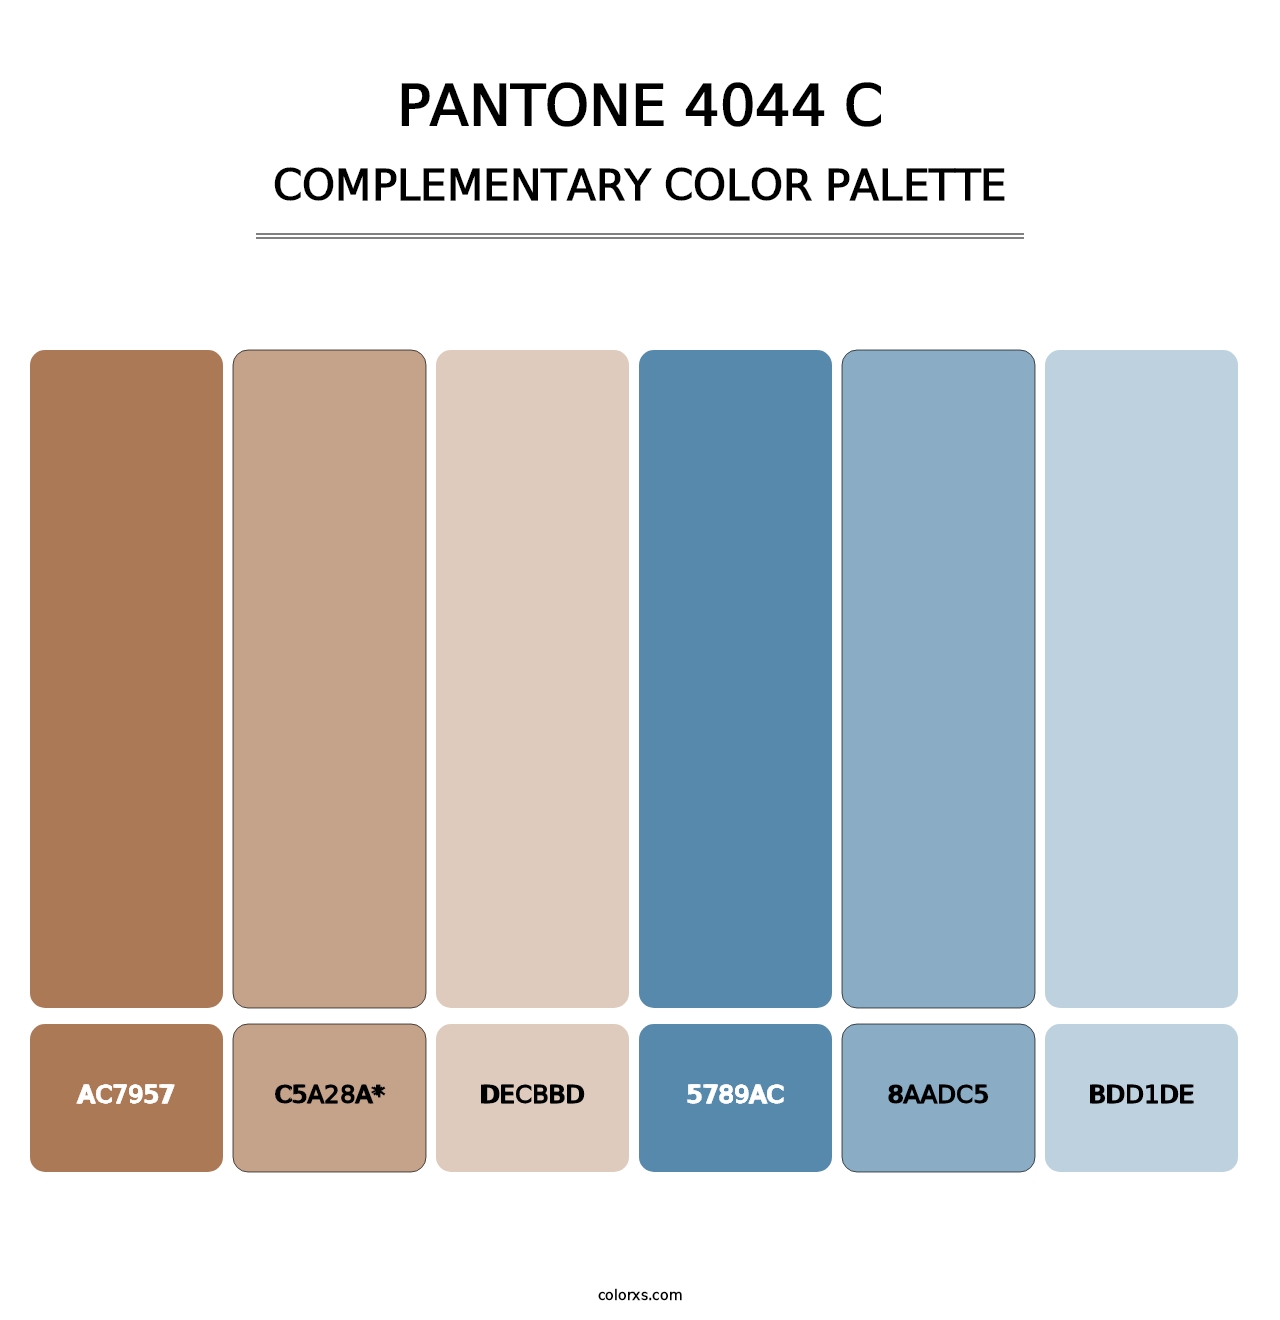 PANTONE 4044 C - Complementary Color Palette